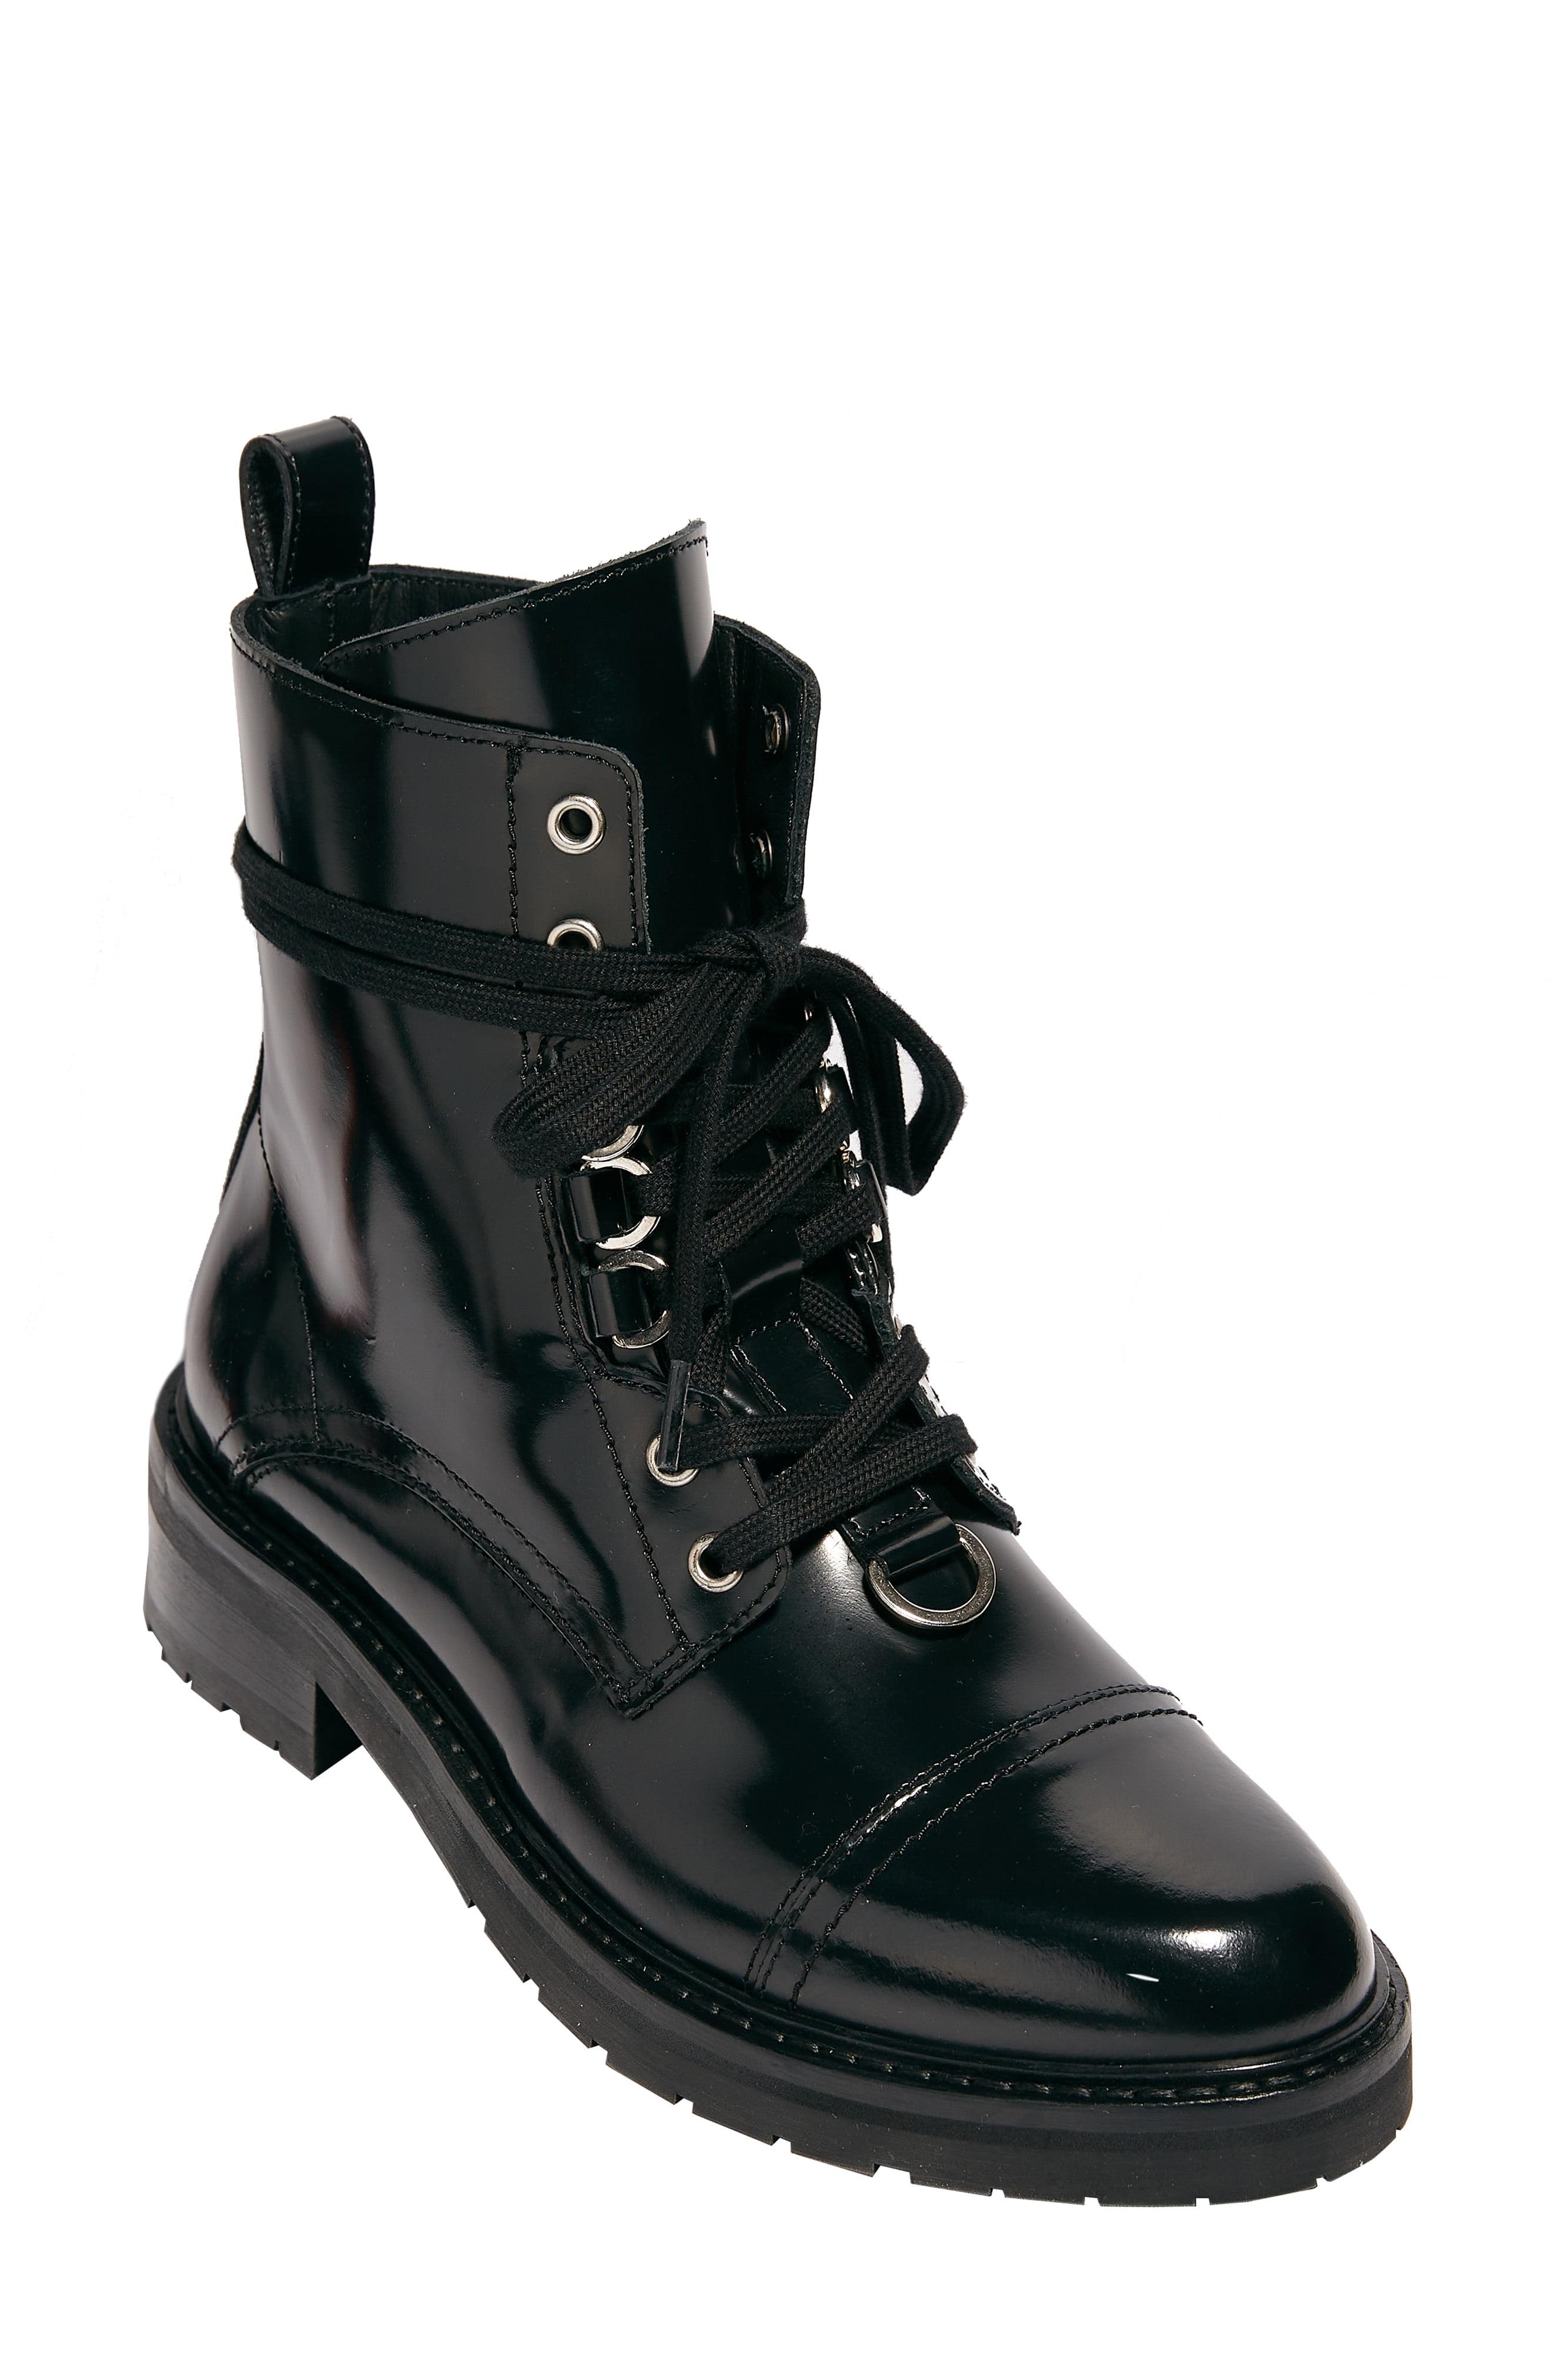 AllSaints Lira Hiker Boot in Black Leather (Black) - Lyst